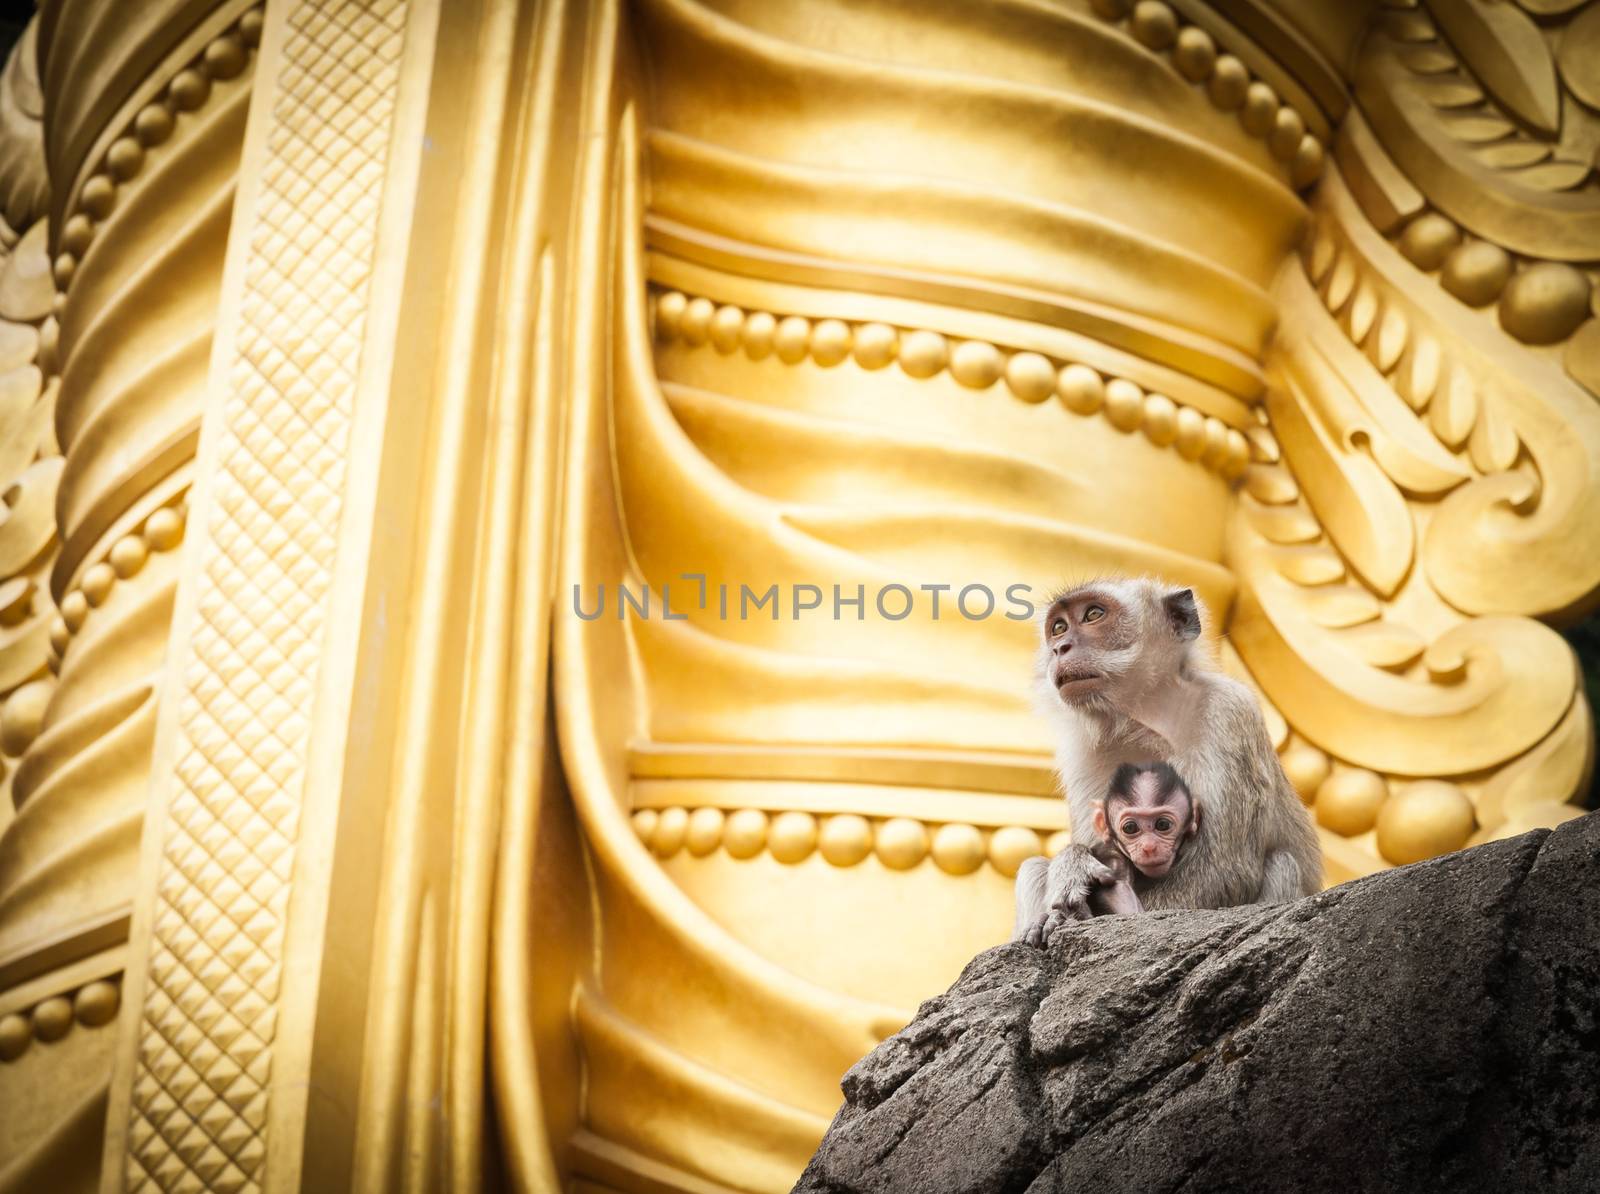 Mother holding baby monkeys of Batu Cave sitting at base of golden statue of Lord Muragan Hundiu shrine, Kuala Lumpur.